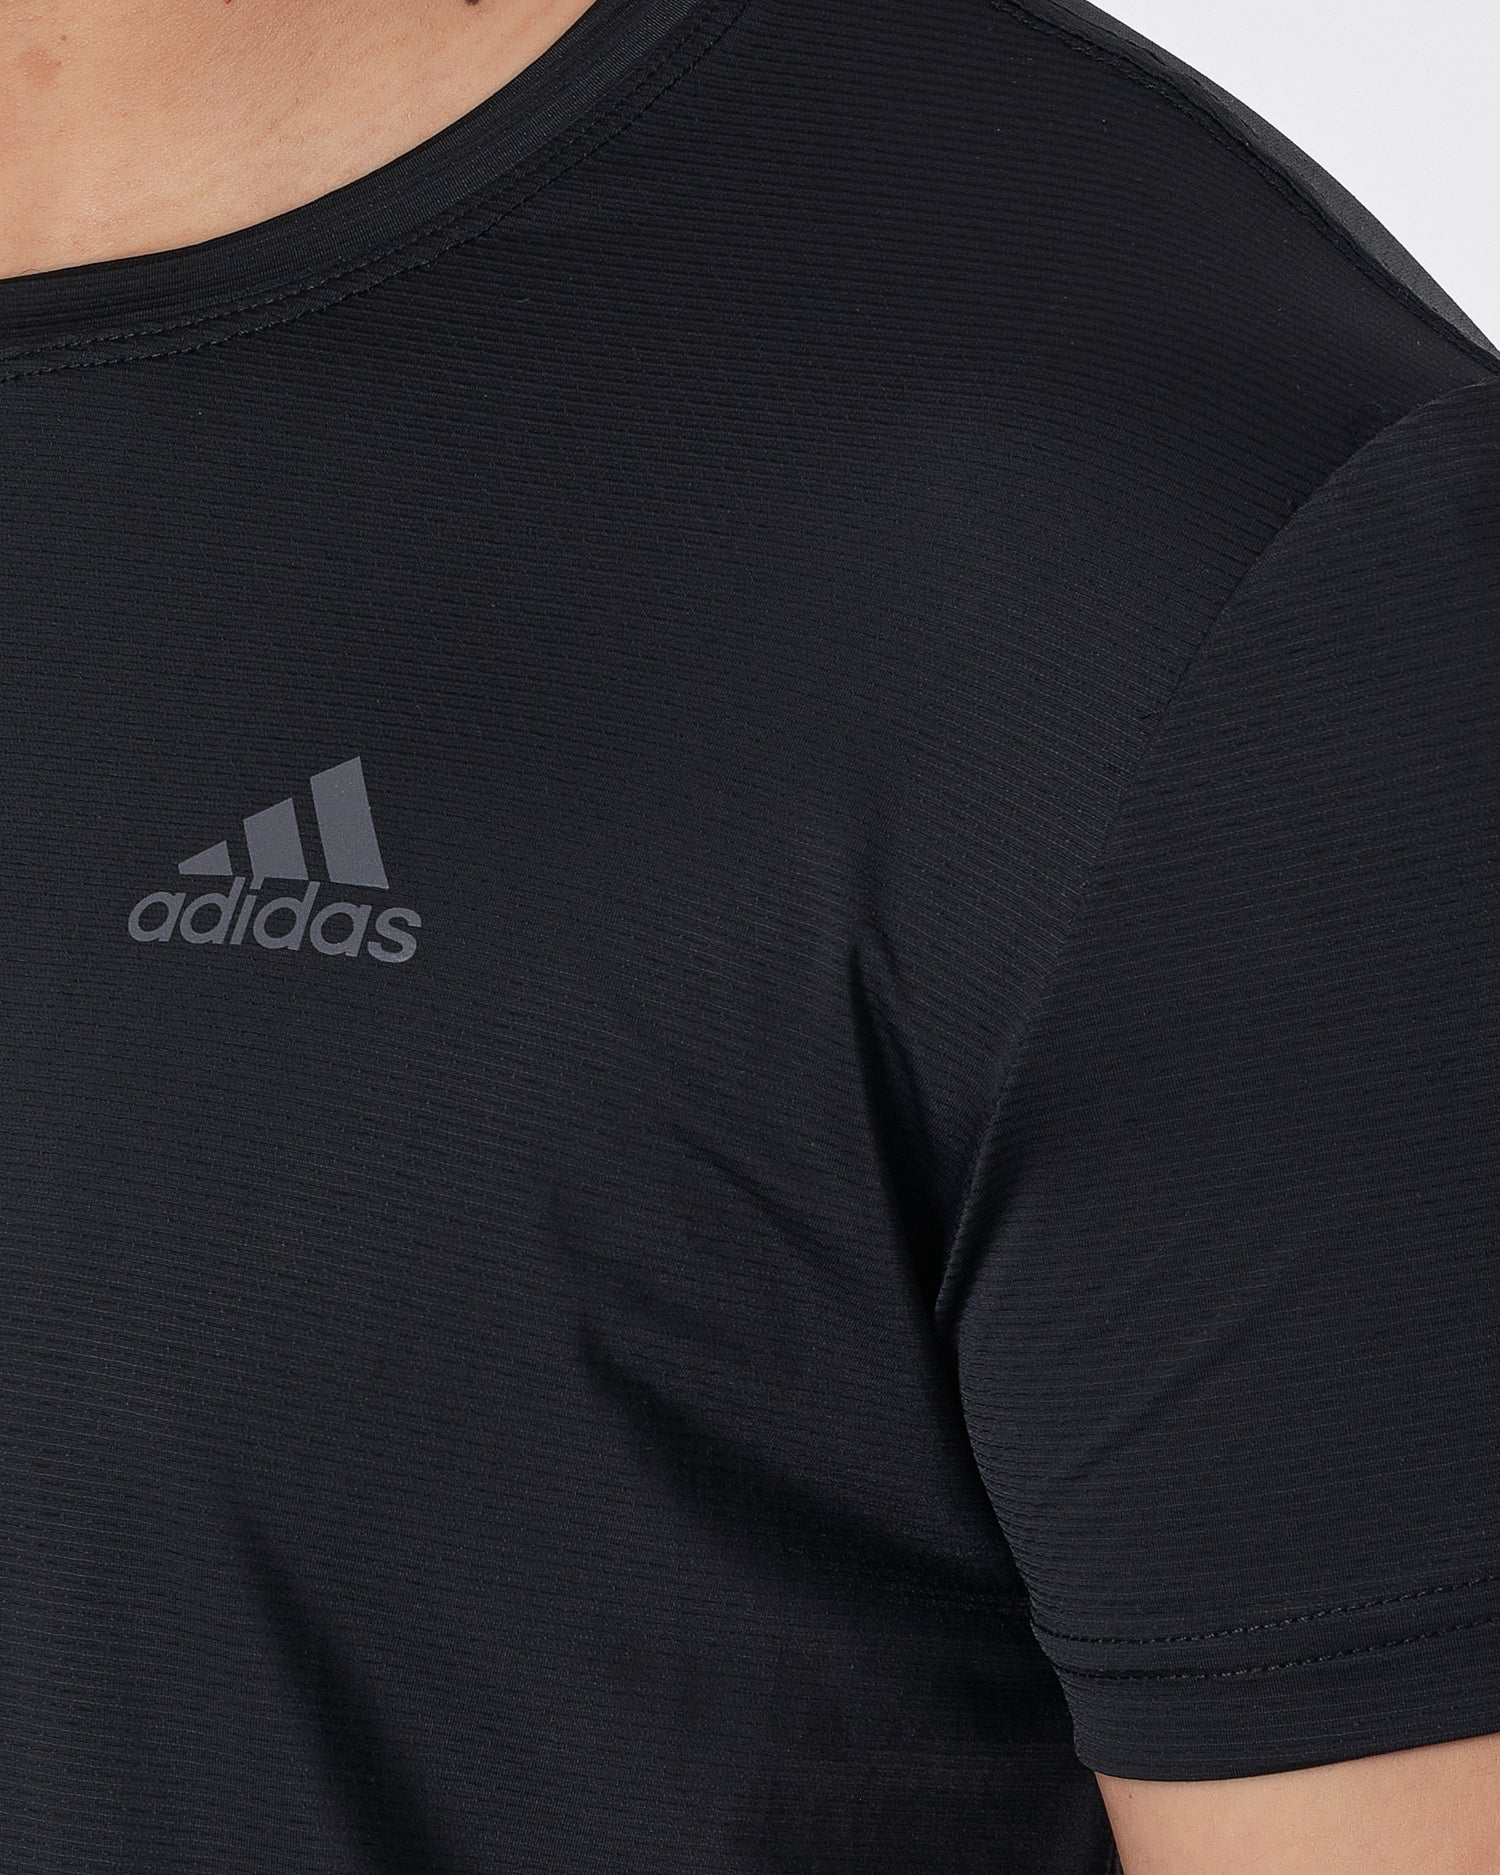 ADI Shoulder Striped Men Black Sport T-Shirt 14.50